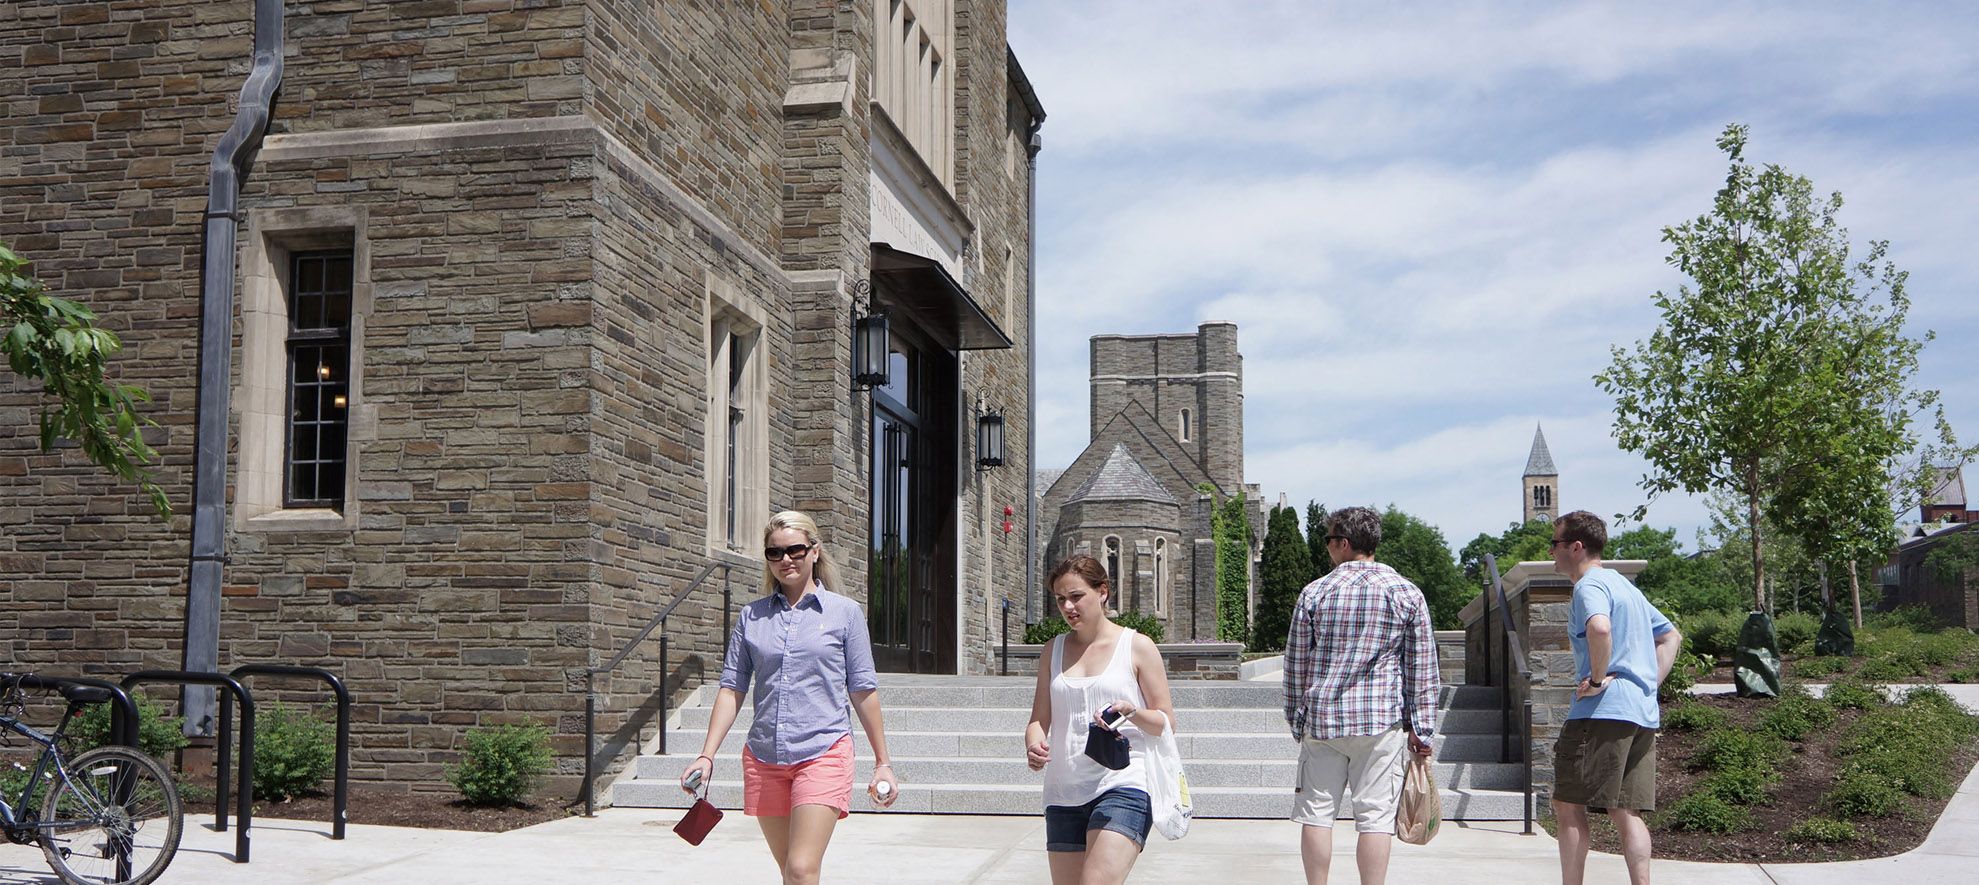 Cornell Law School – Renovation & Addition